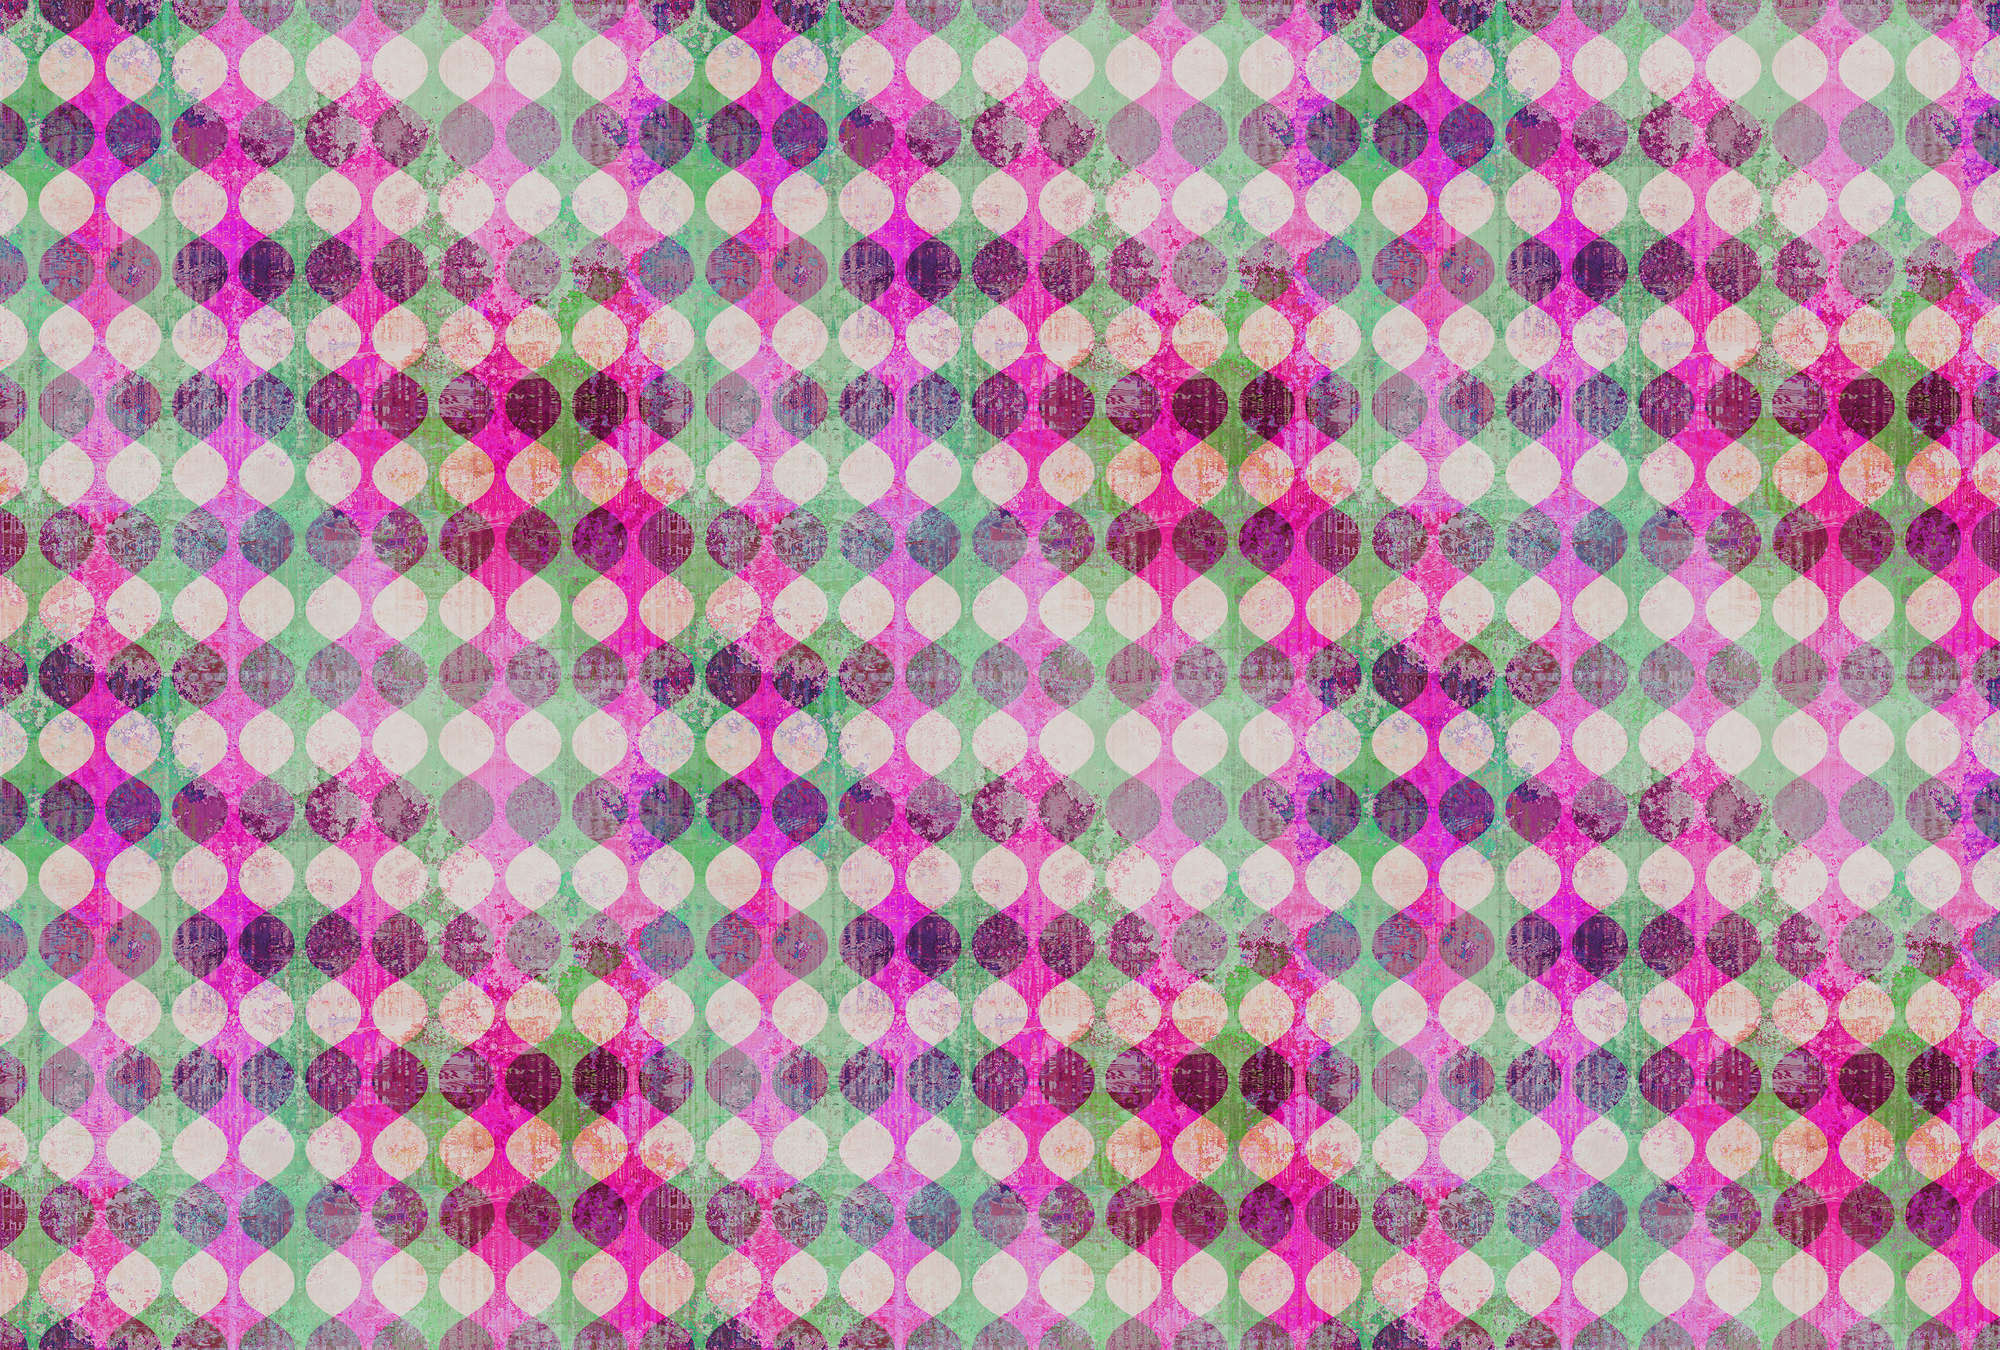             Garland 1 - Retro 70s Wallpaper - Green, Pink | Matt Smooth Non-woven
        